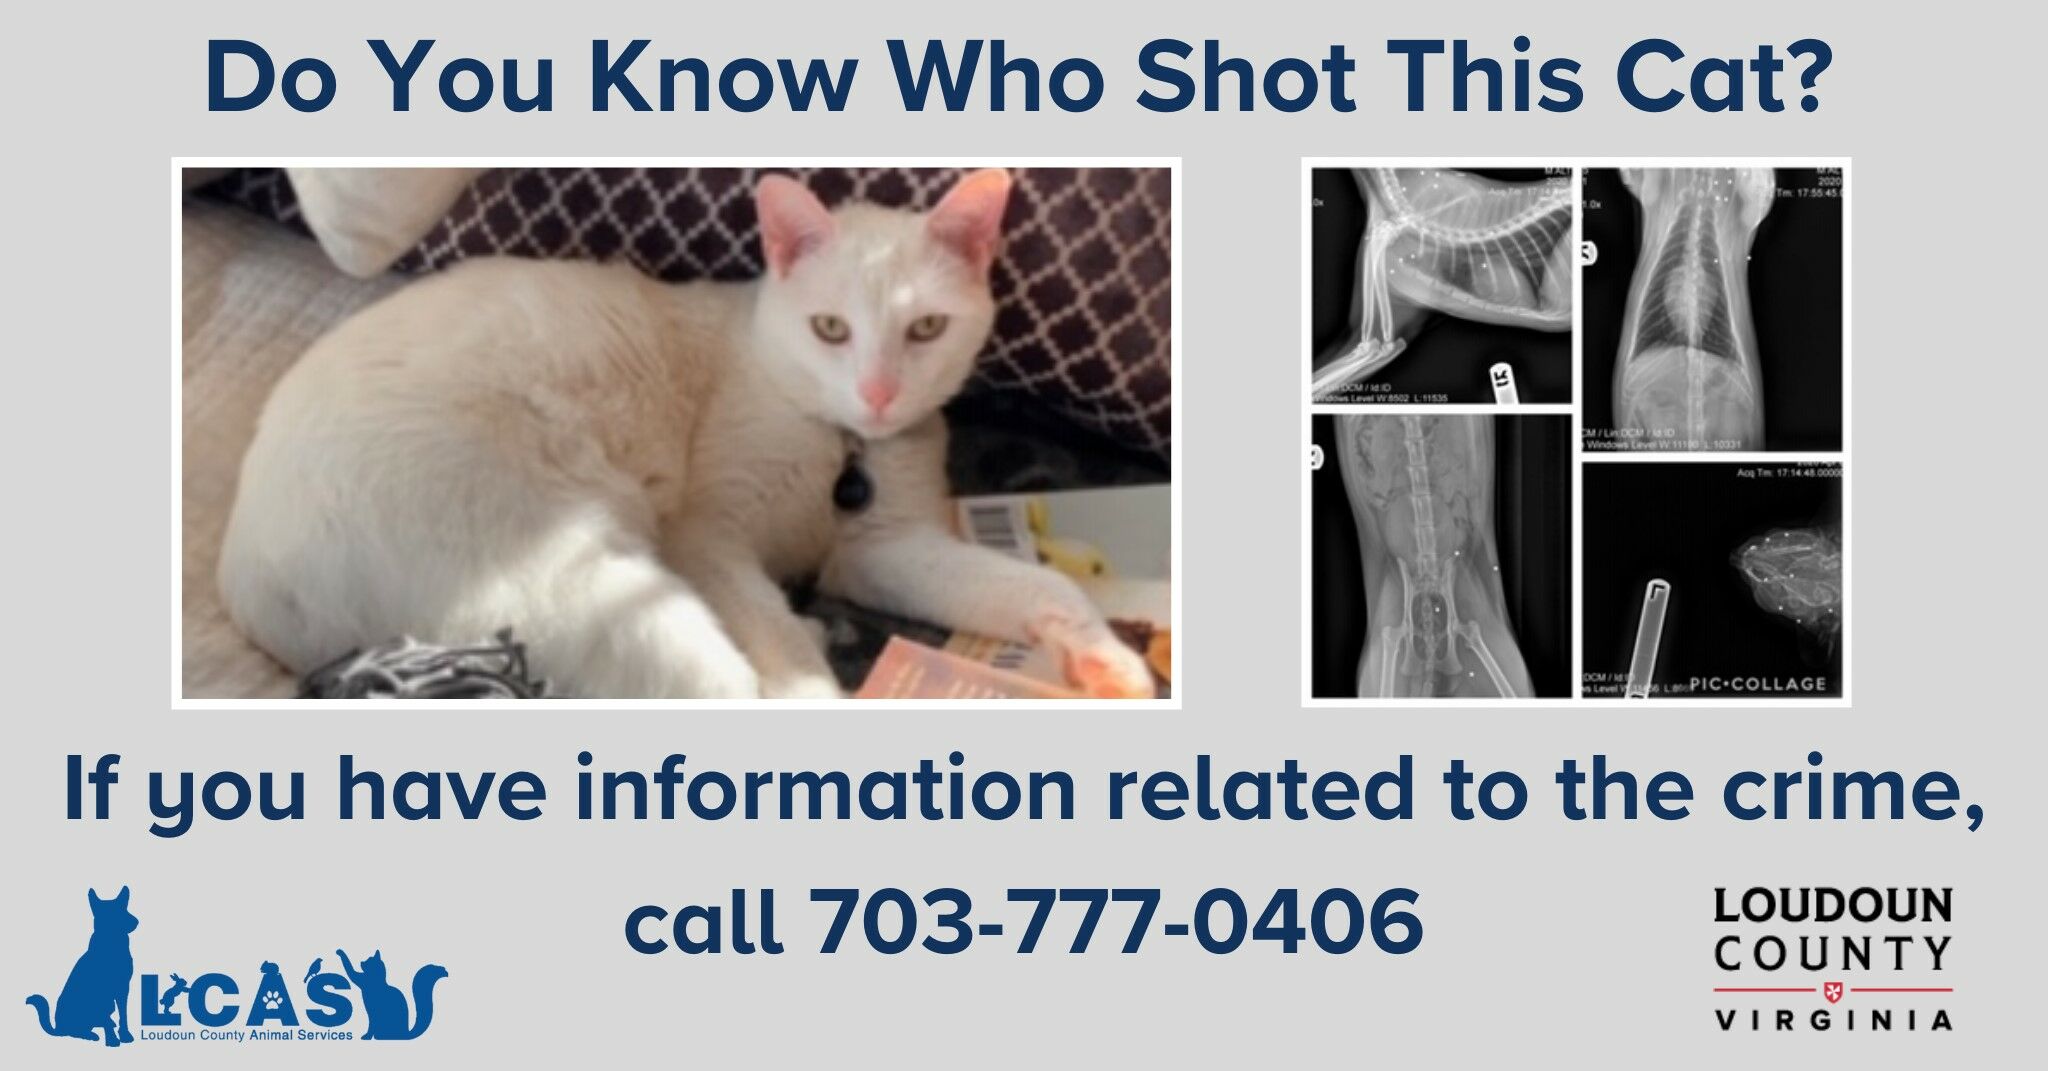 Cat shot in Loudoun Co.; animal services seeks info - WTOP News